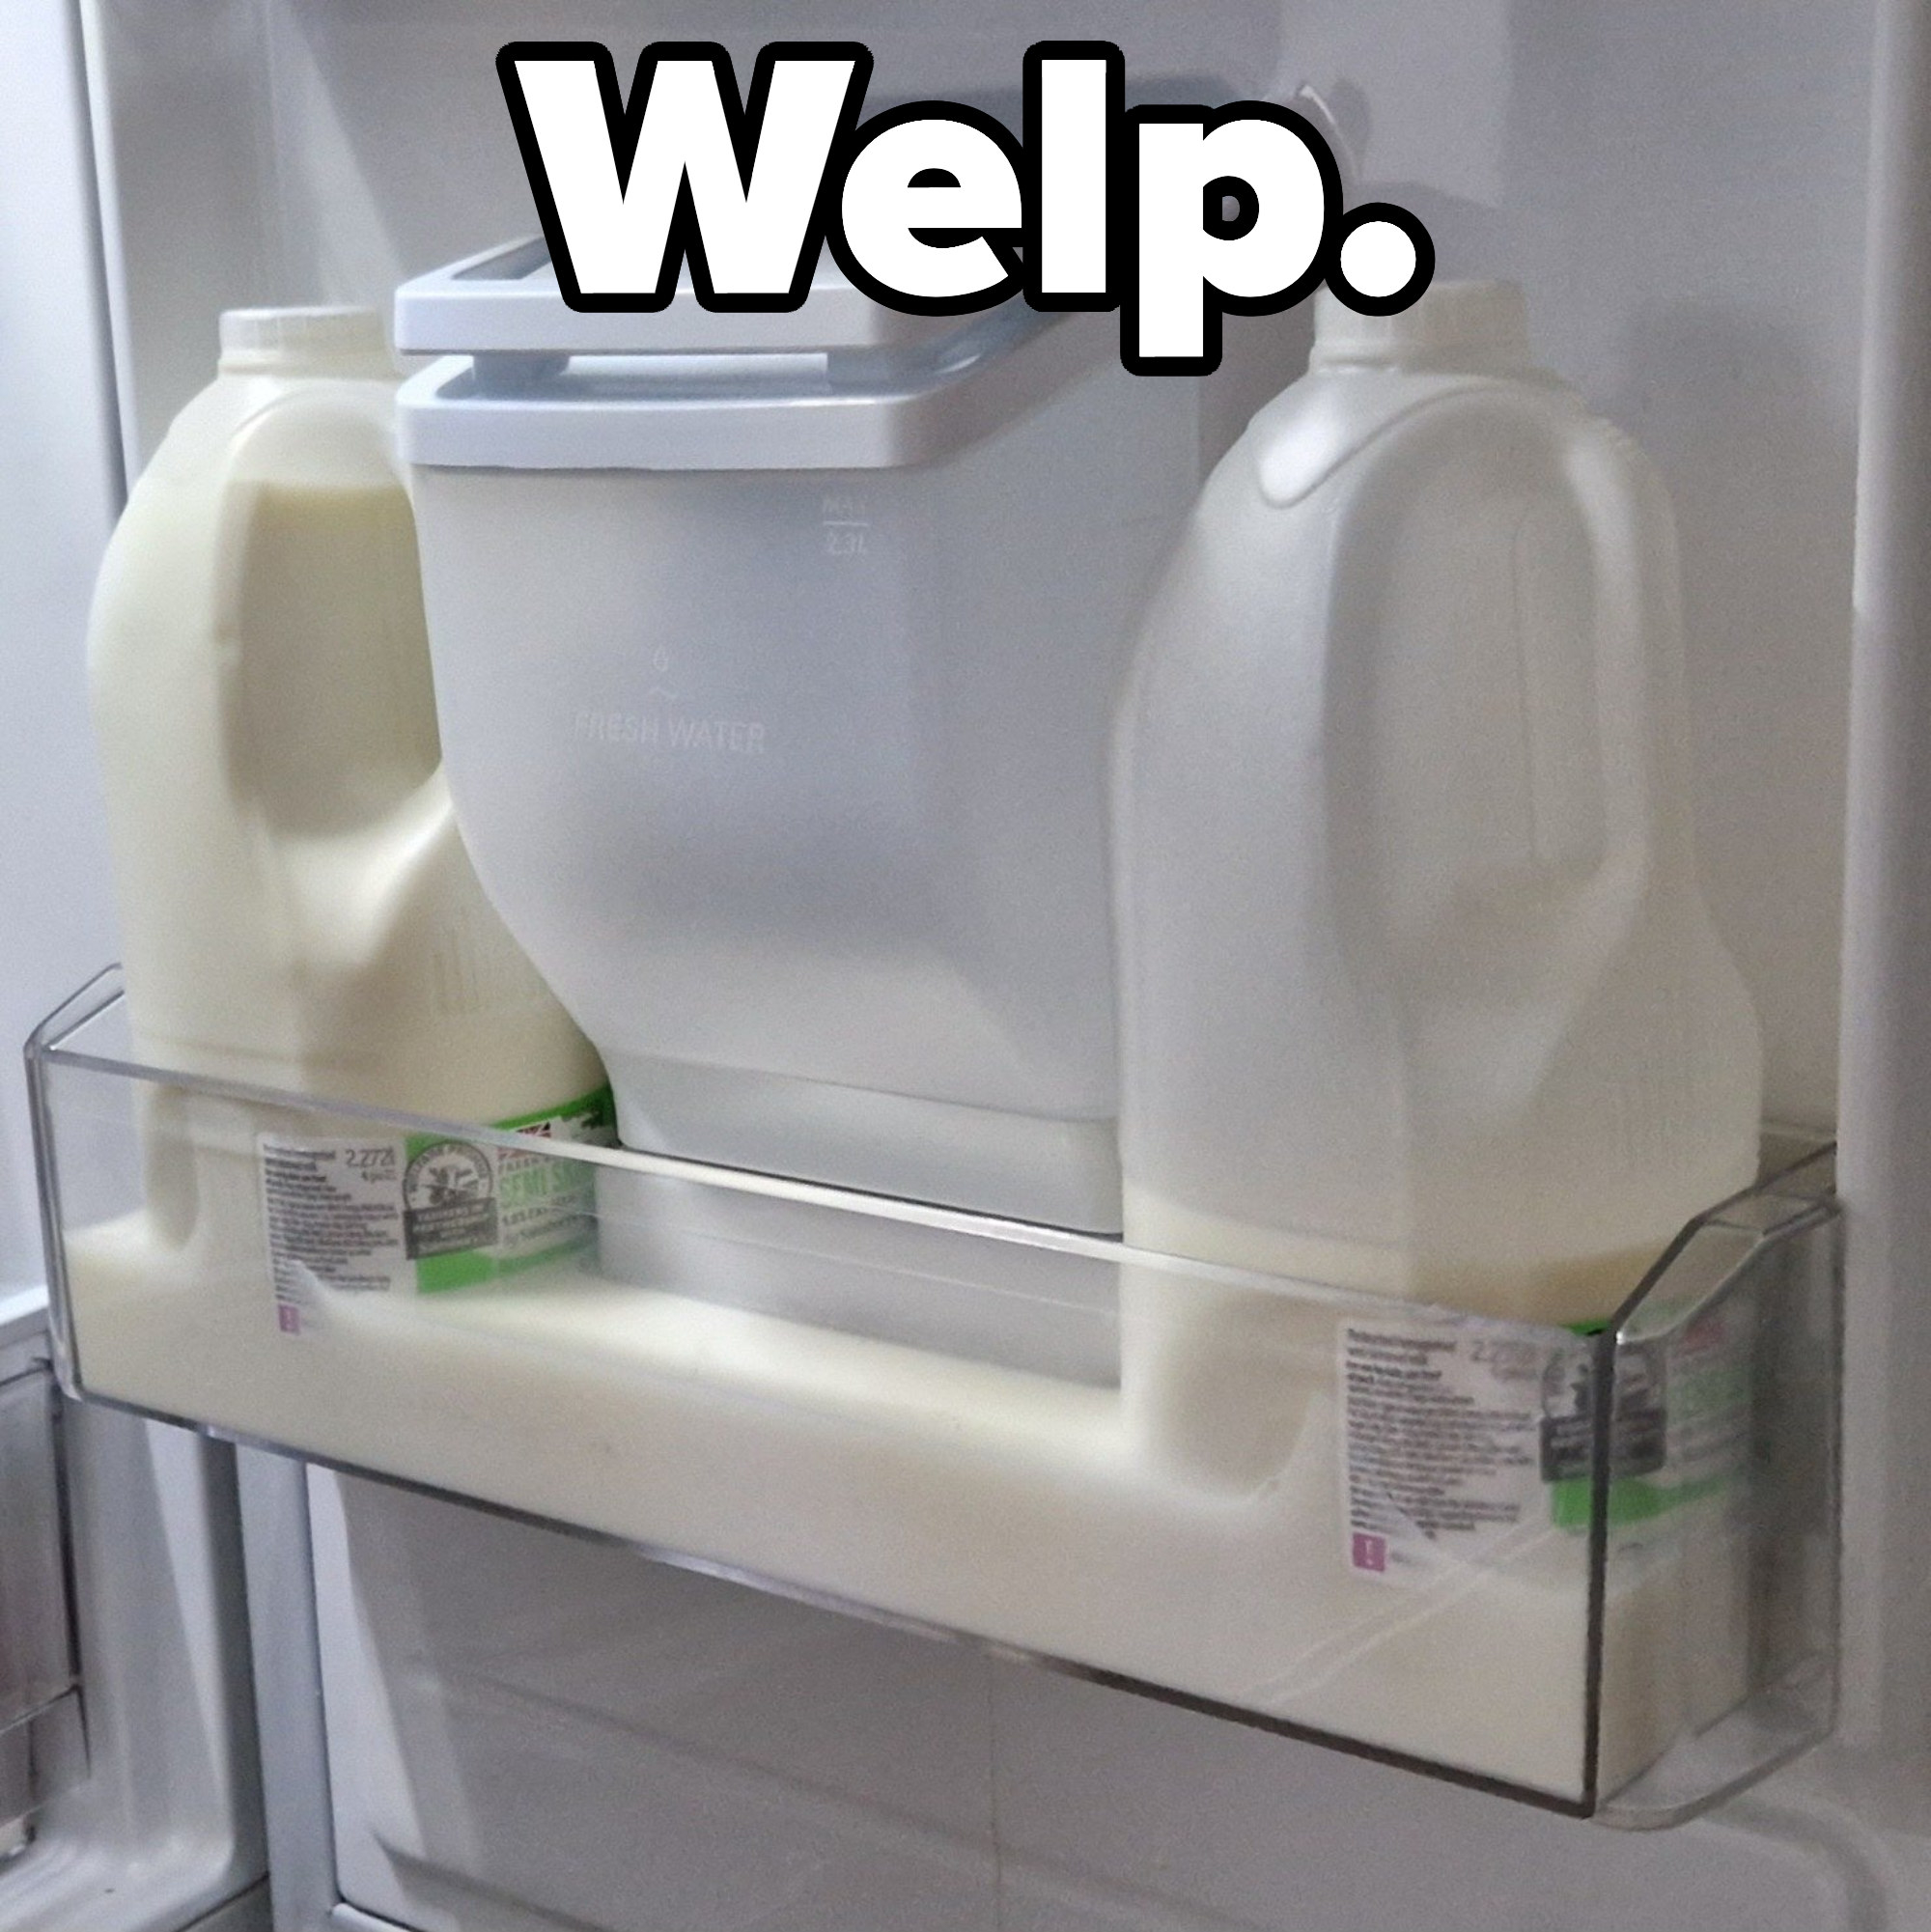 Spilled milk in a fridge